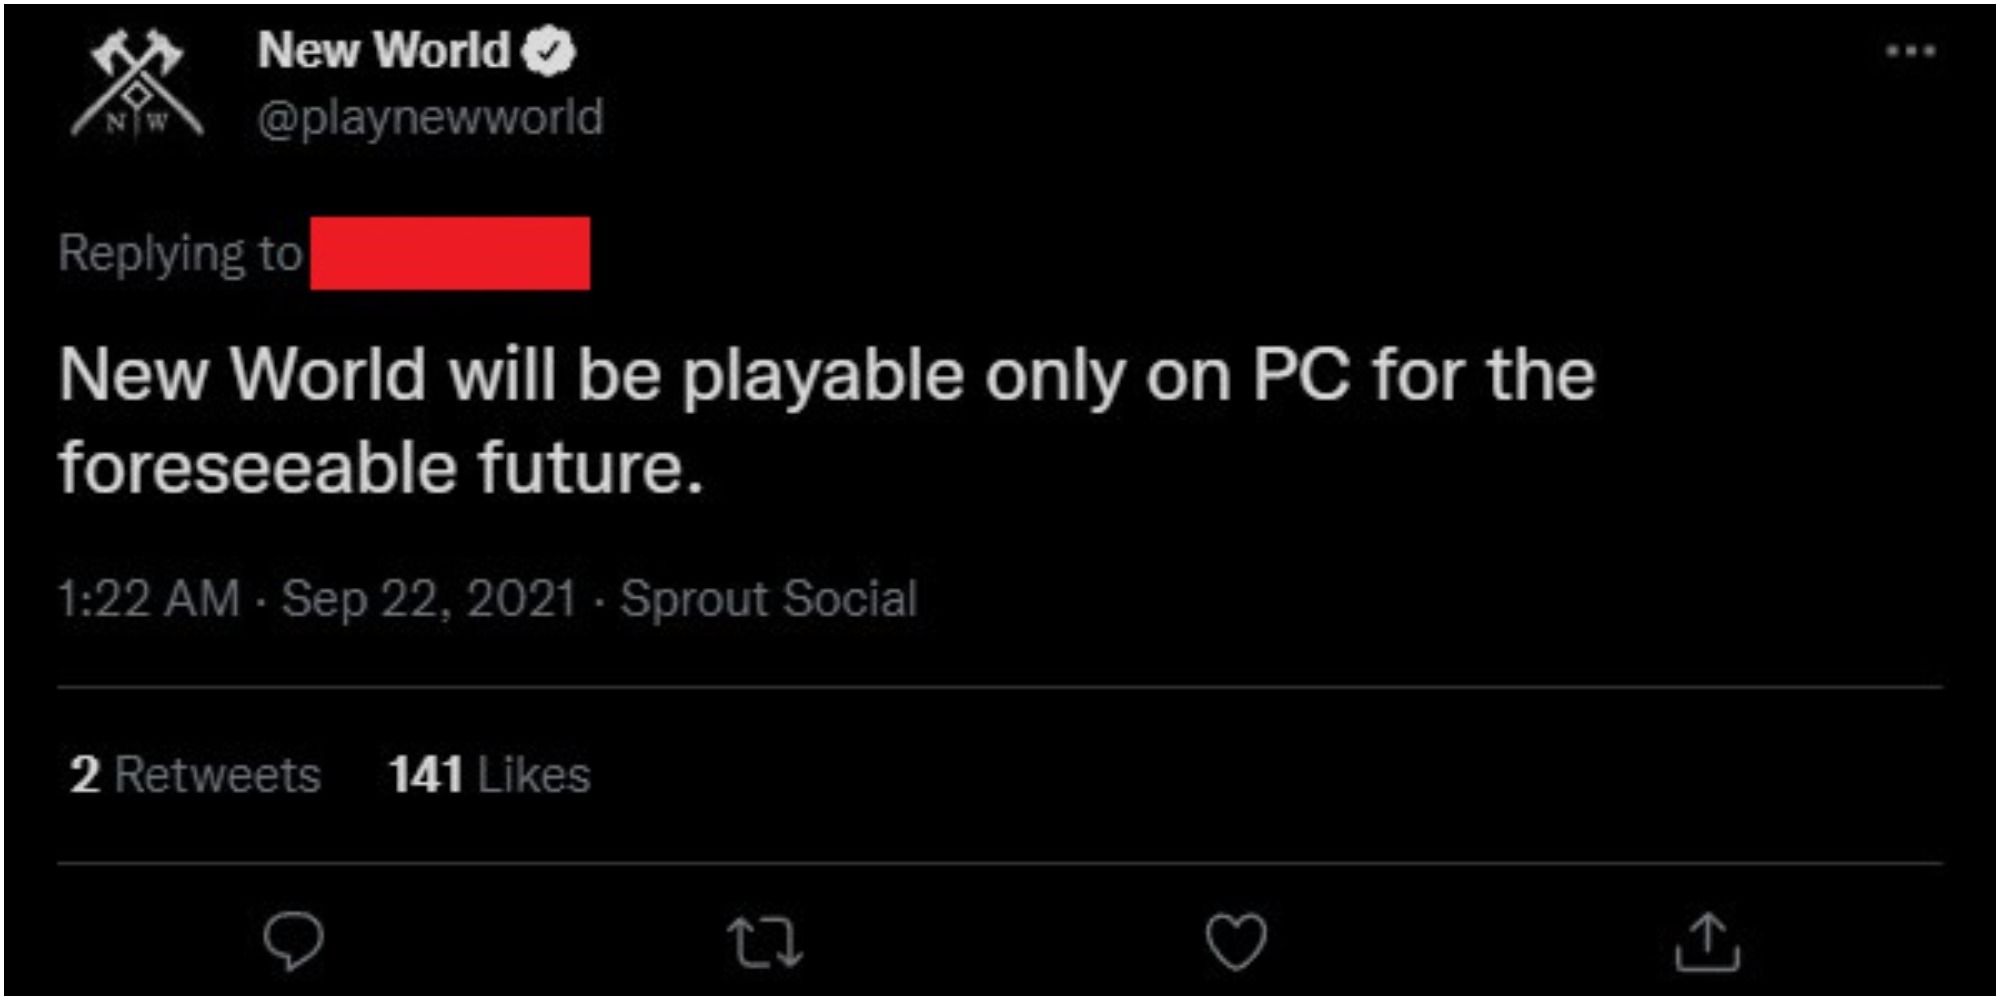 New World Tweet Regarding PC Only Plans